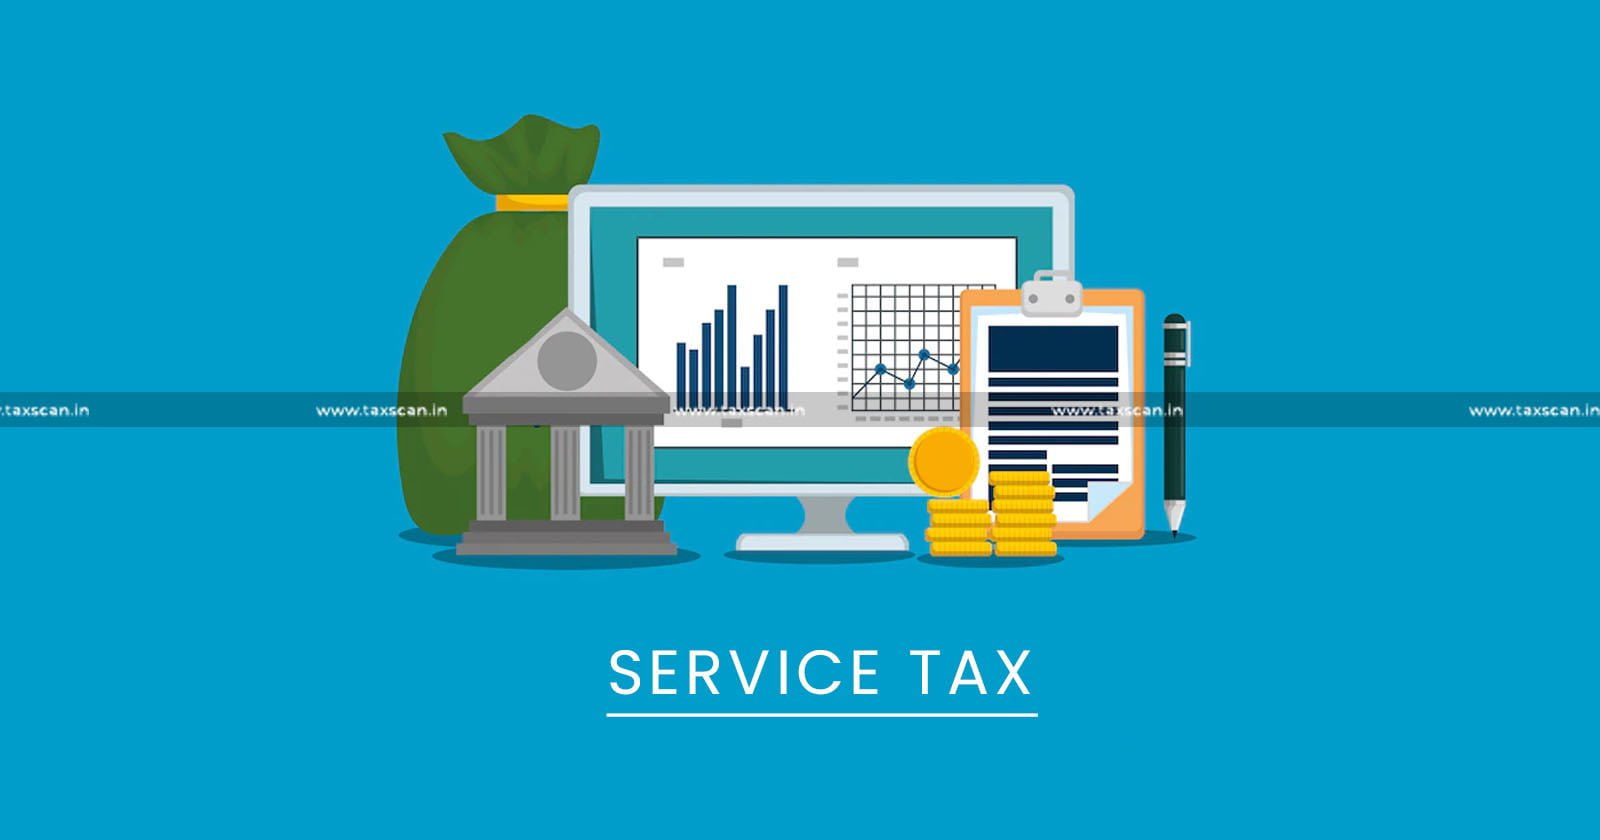 No -Service Tax -Transfer -Transit Mixer -Hire - CESTAT - TAXSCAN